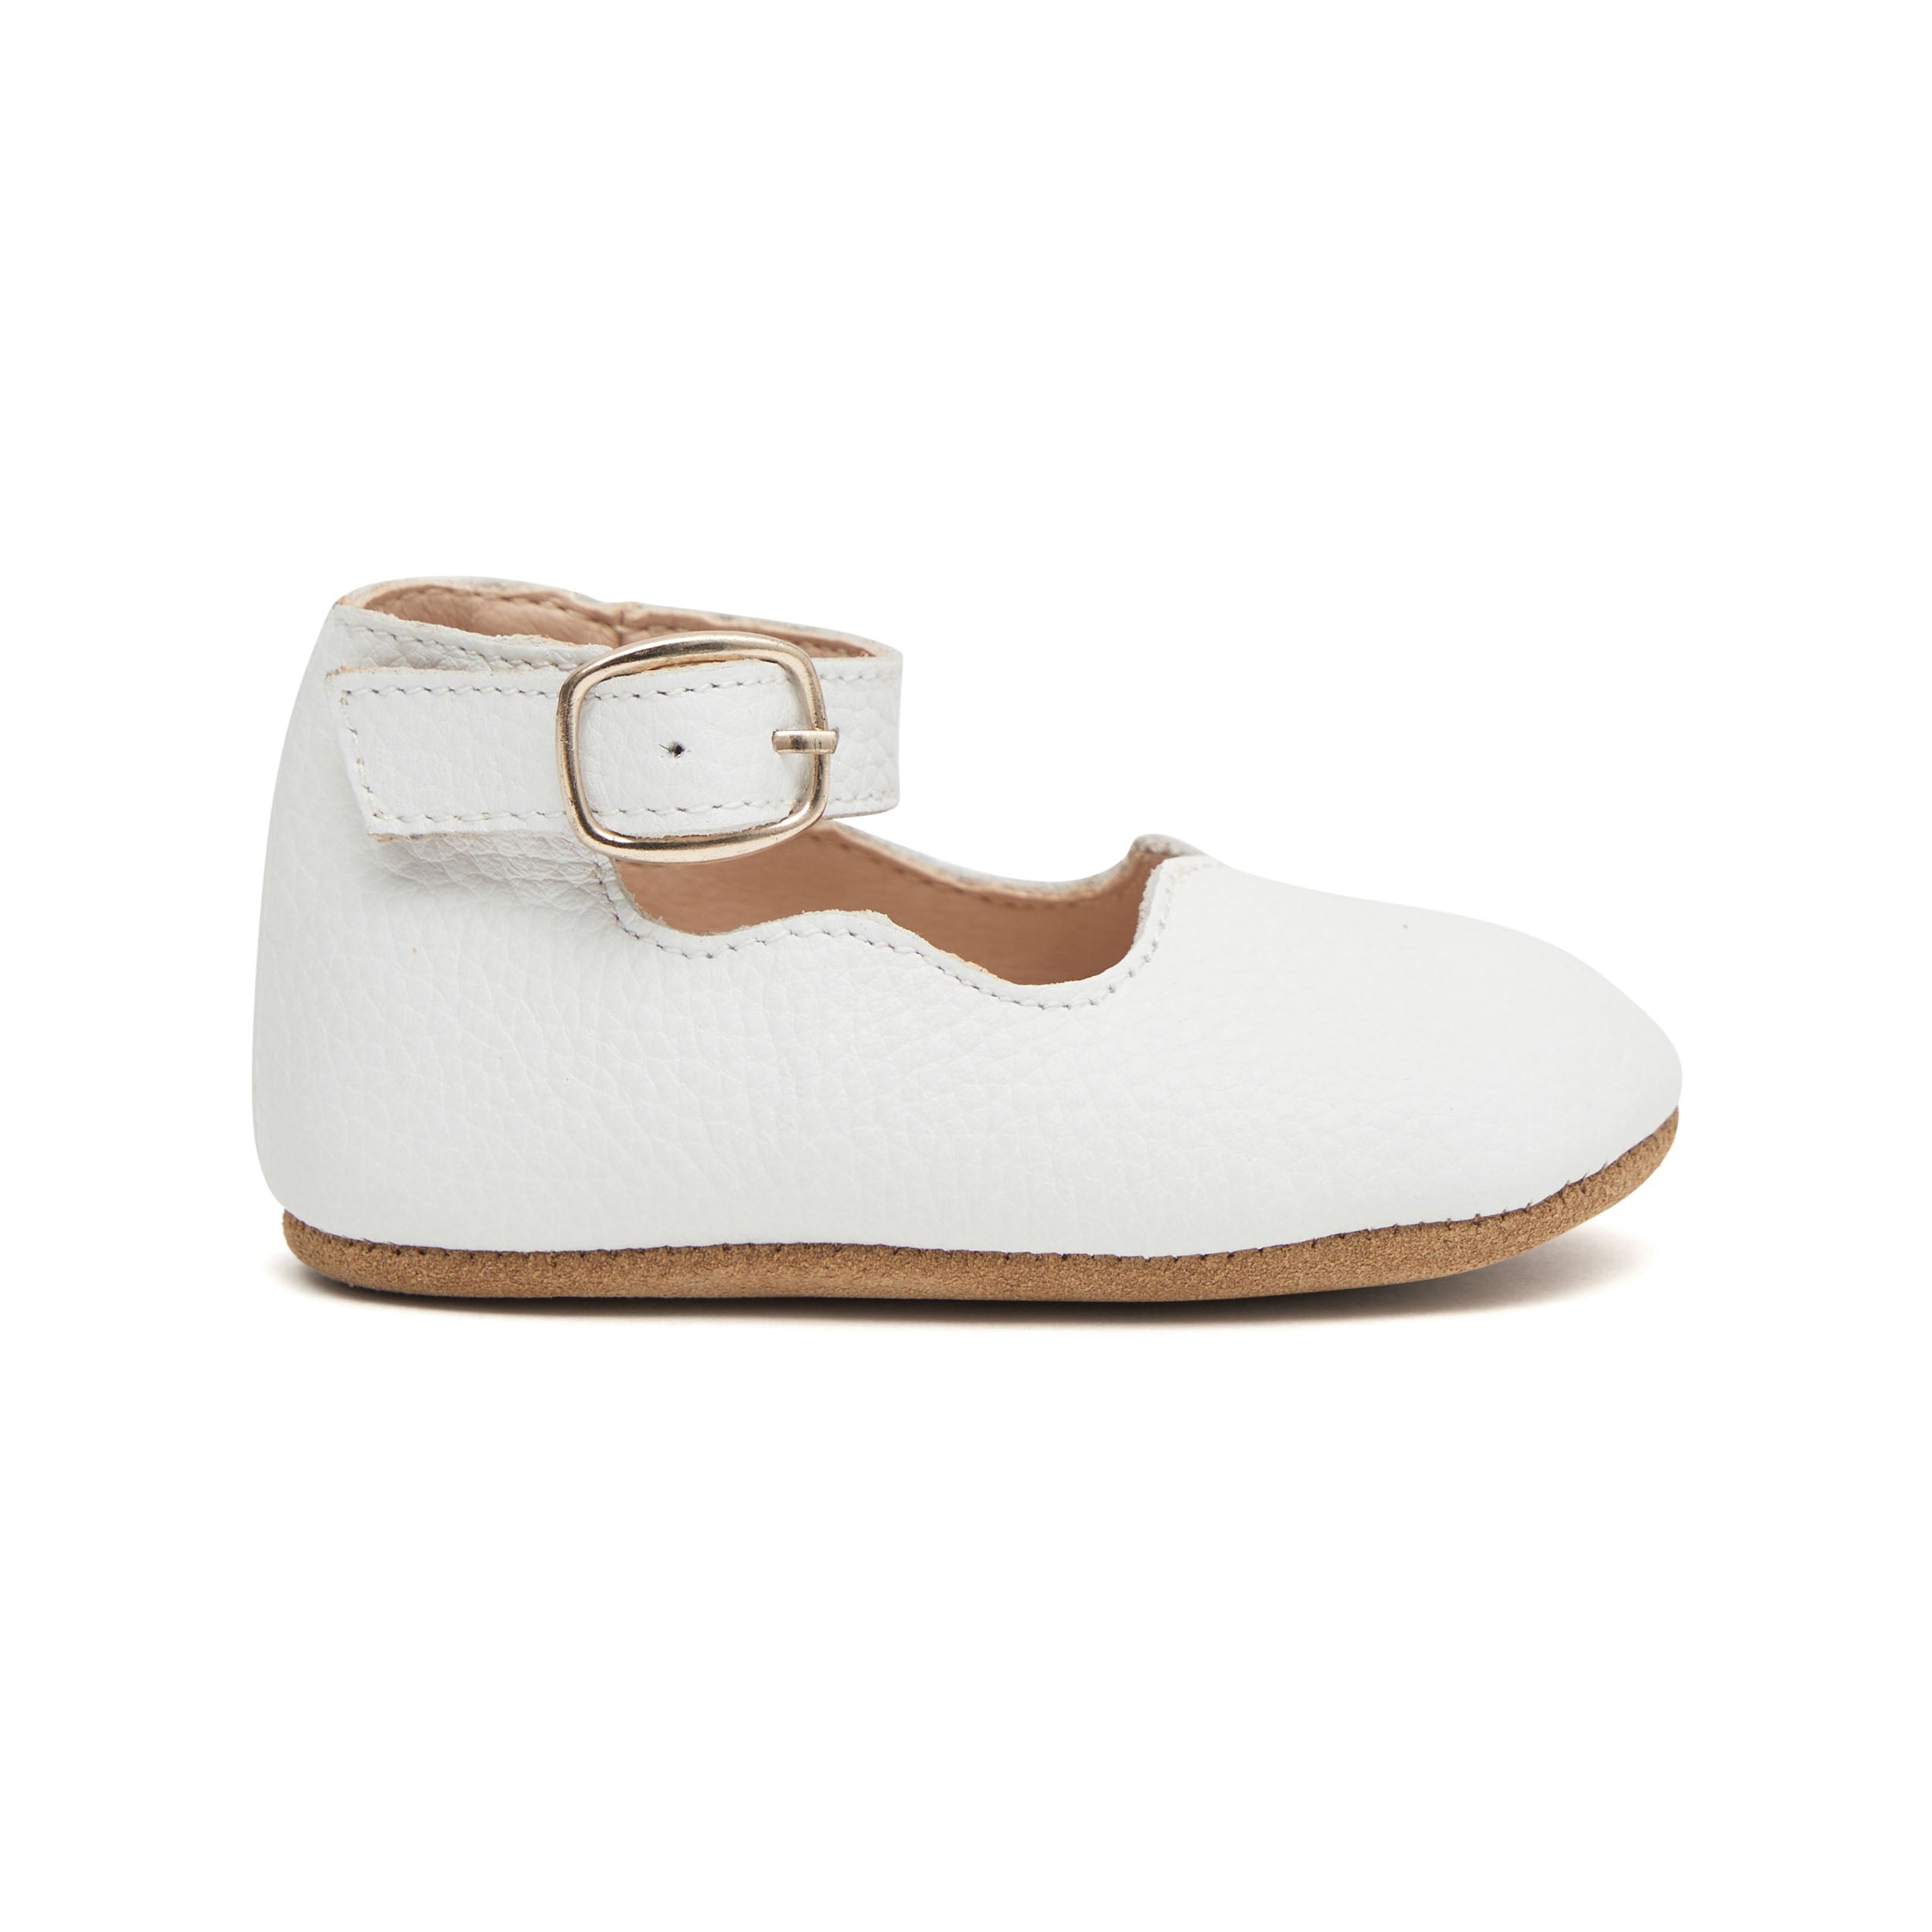 Girls White Leather Mary Jane Shoes